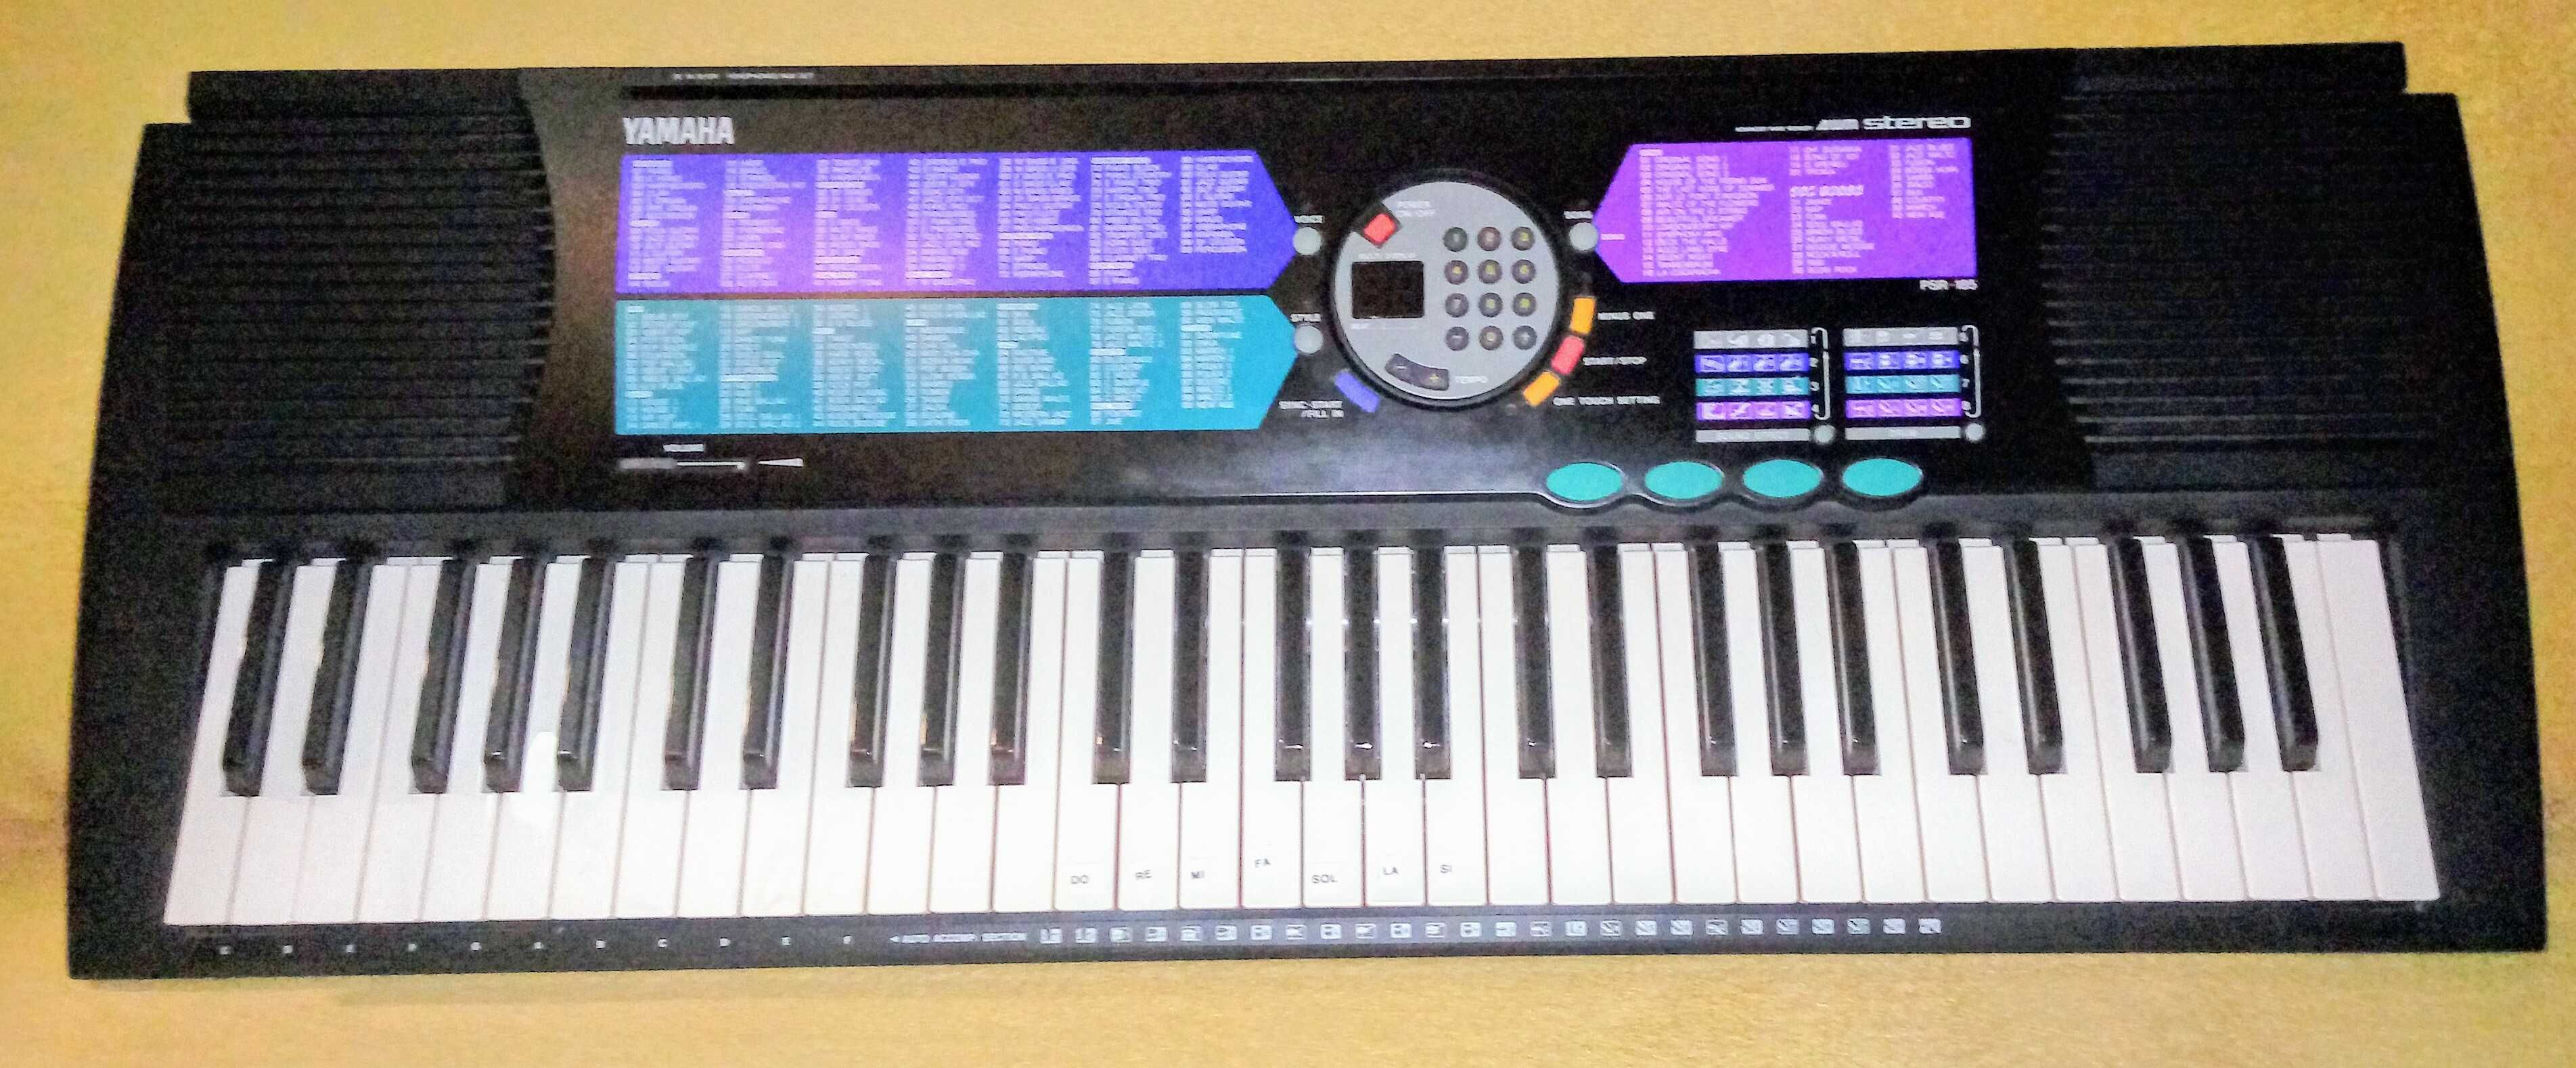 YAMAHA PSR-185 keyboard 5 oktaw,stereo, stan b.dobry